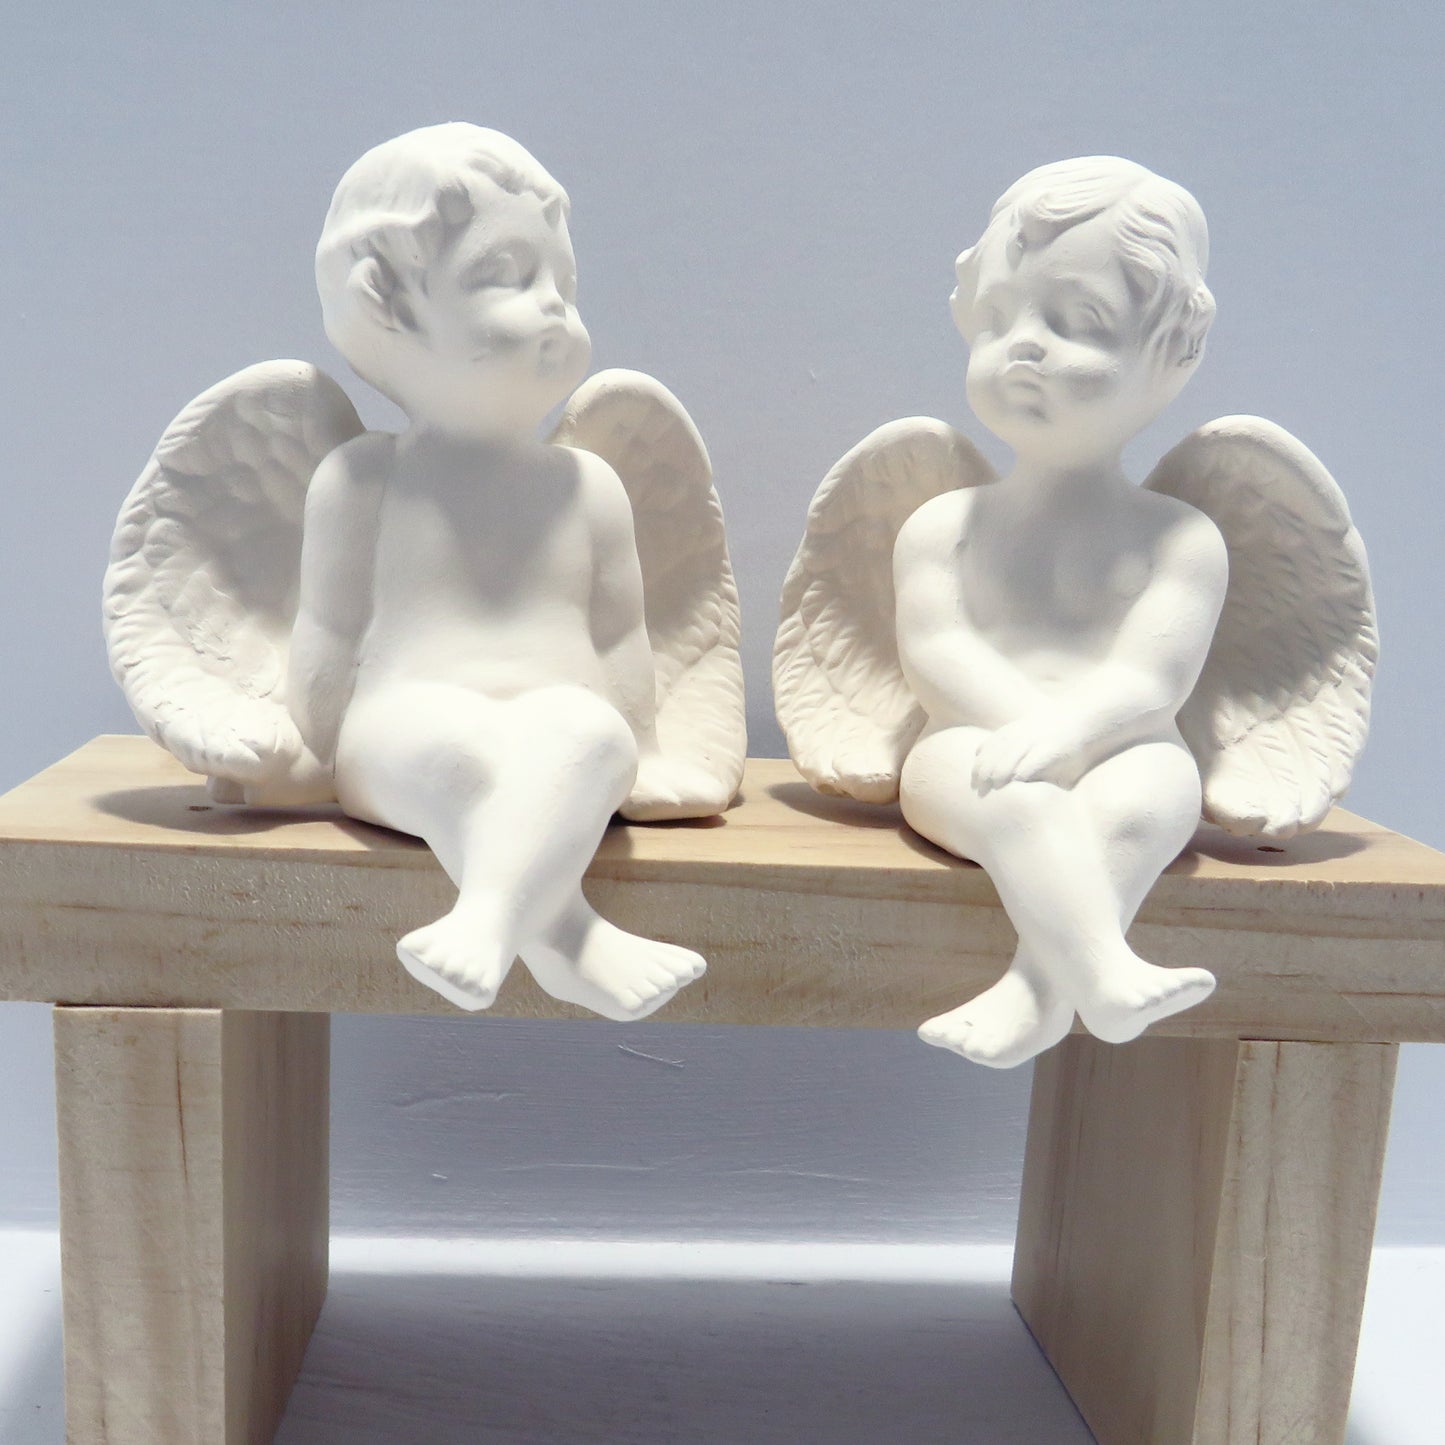 Handmade Ready to Paint Ceramic Bisque Cherub Figurines, Sitting Cherub Statues with Heads Turned, Angel Decor, Angel Gift, Cherub Decor